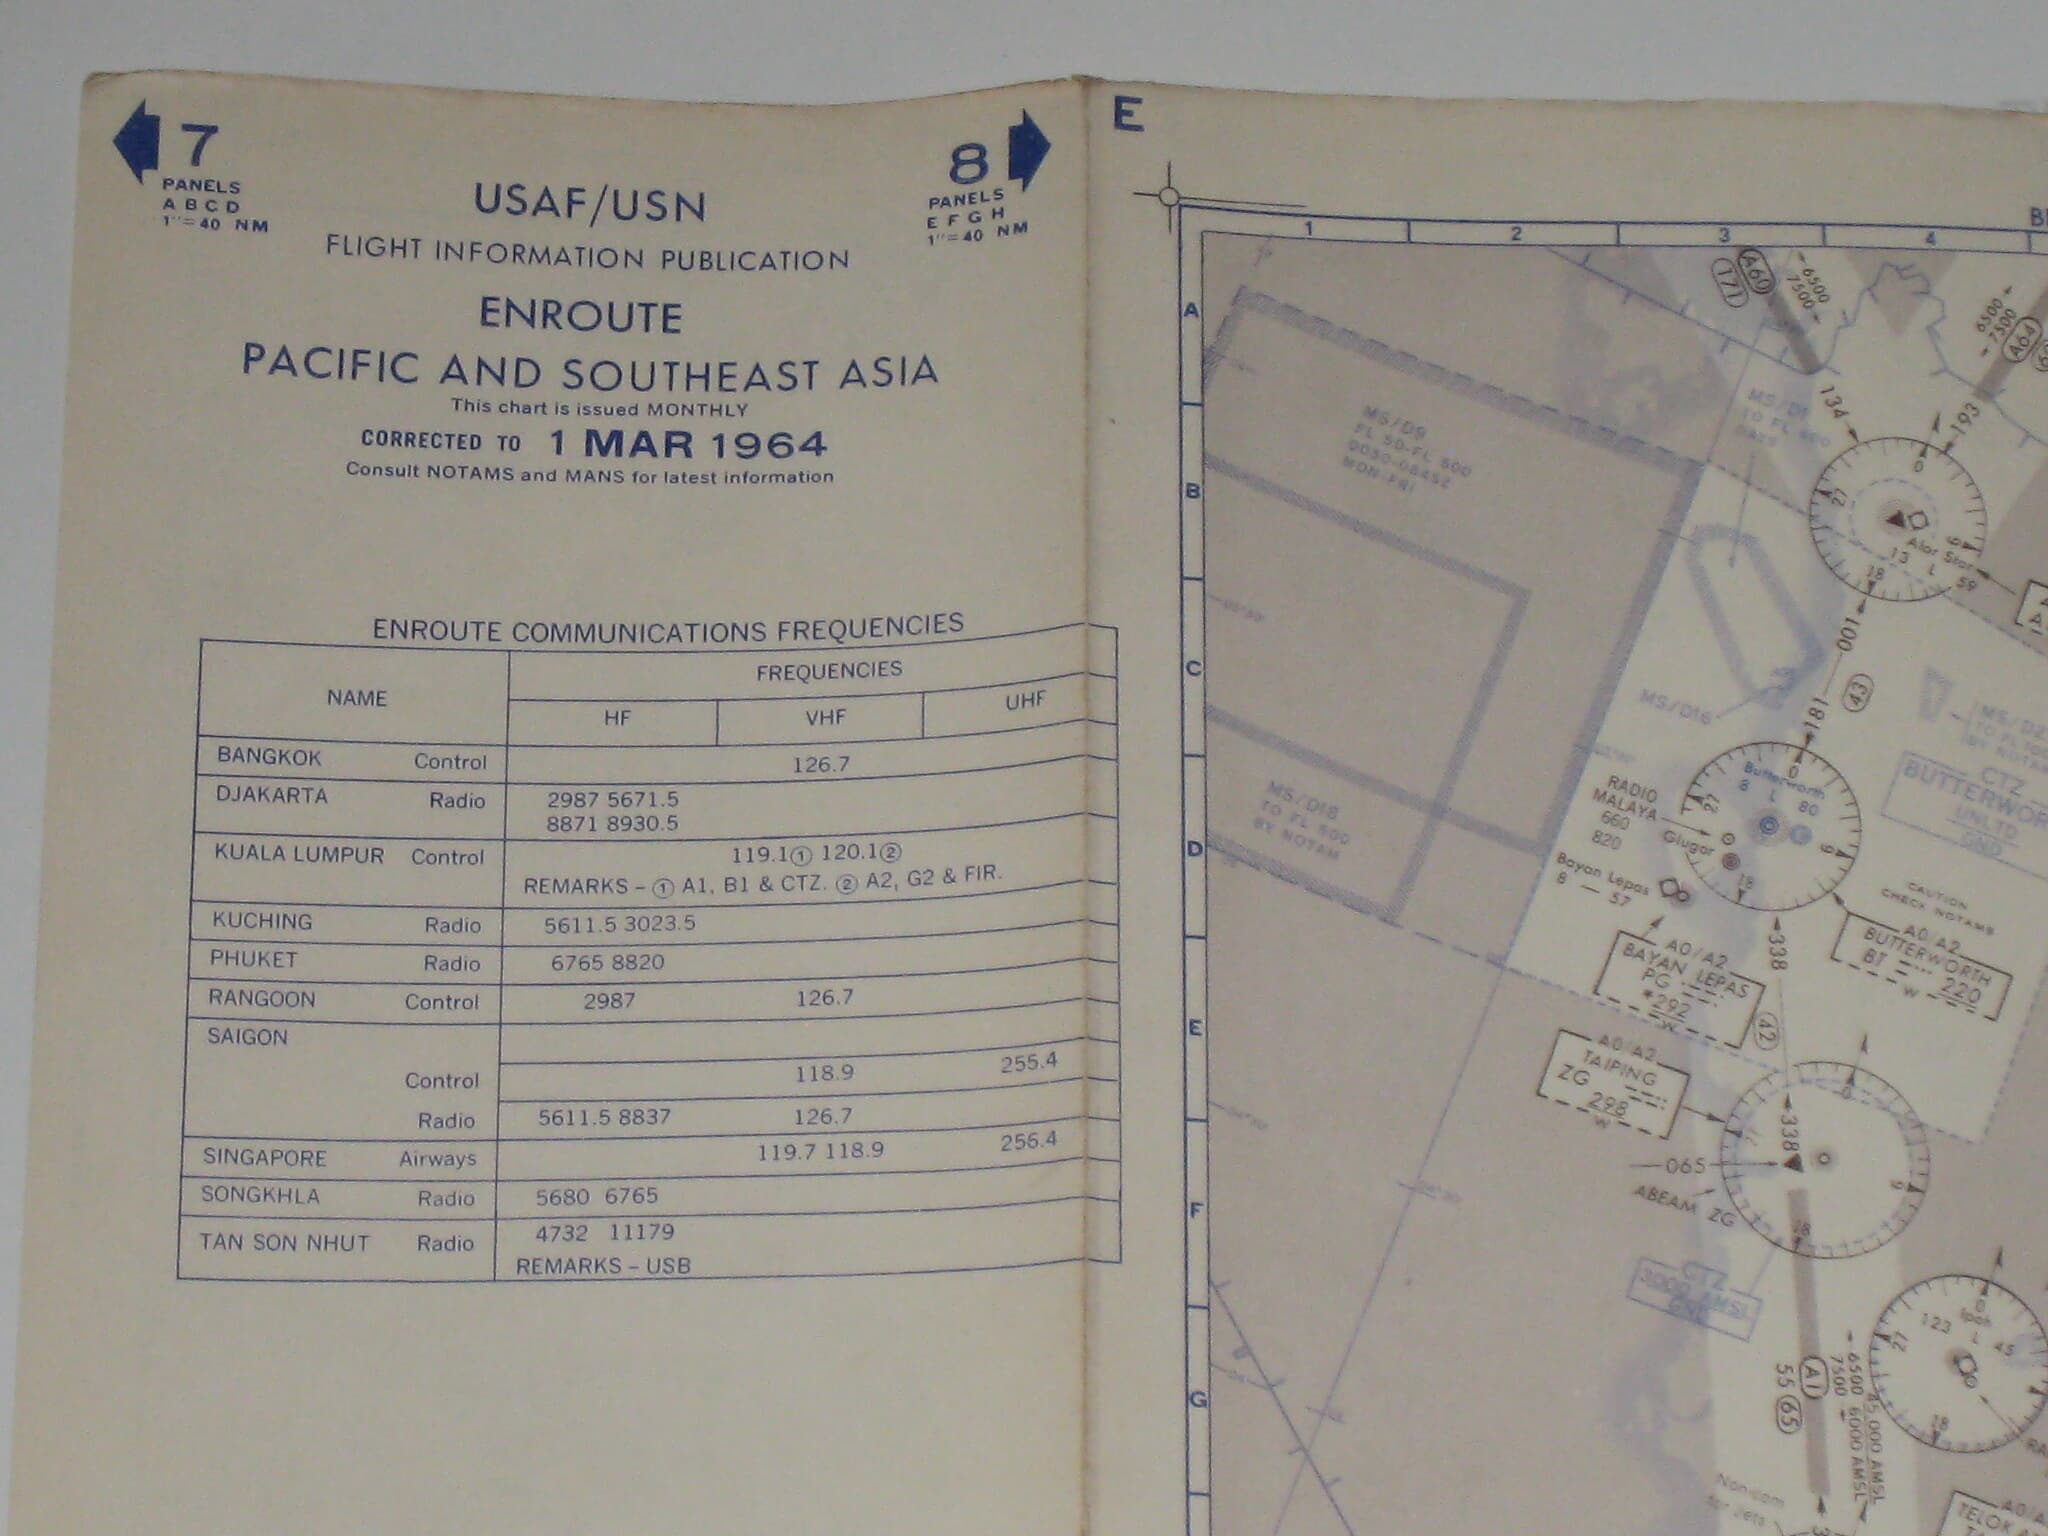 usaf/usn flght information publication FACIFIC AND SOUTHEAST ASIA 미국해군 항로챠트,,,1964년 ,,, 8.7 태평양 동남아시아 항공도 항공지도